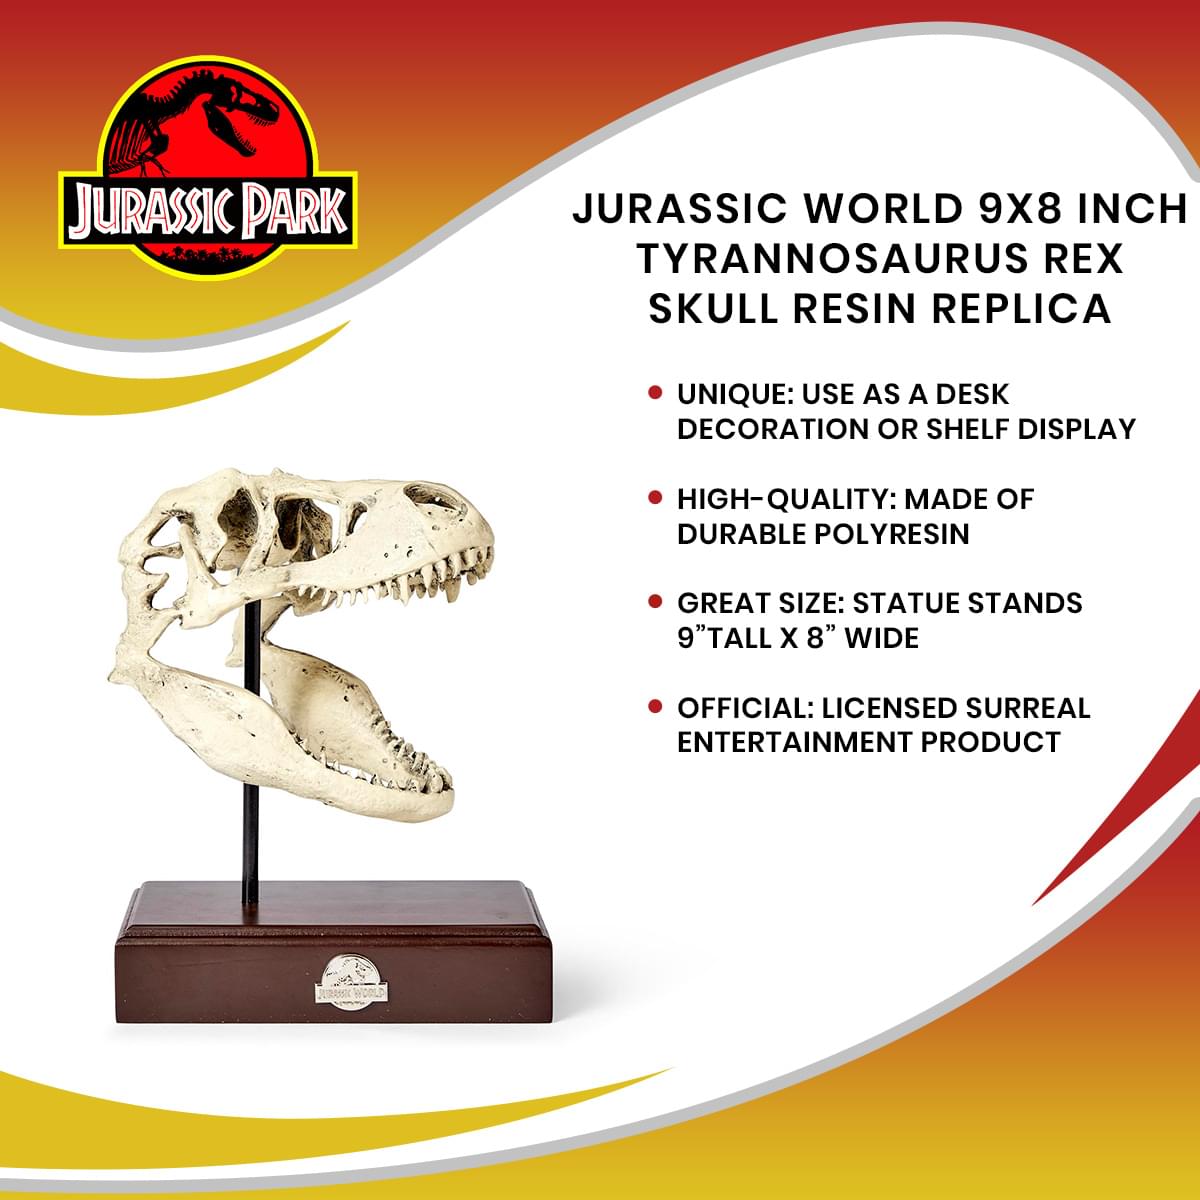 Jurassic World 9x8 Inch Tyrannosaurus Rex Skull Resin Replica